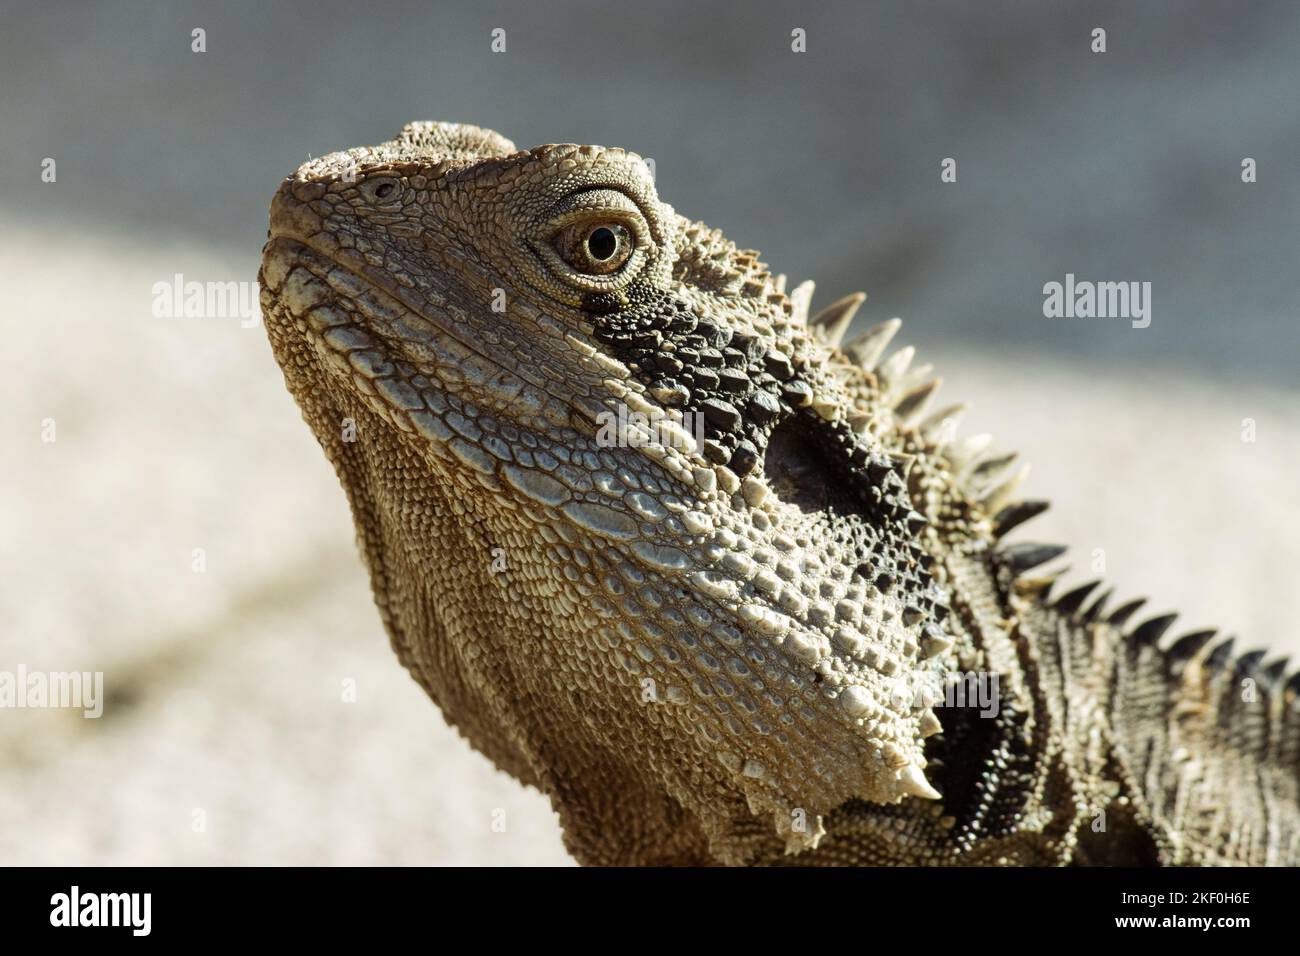 Close-up portrait of an Australian eastern water dragon Stock Photo